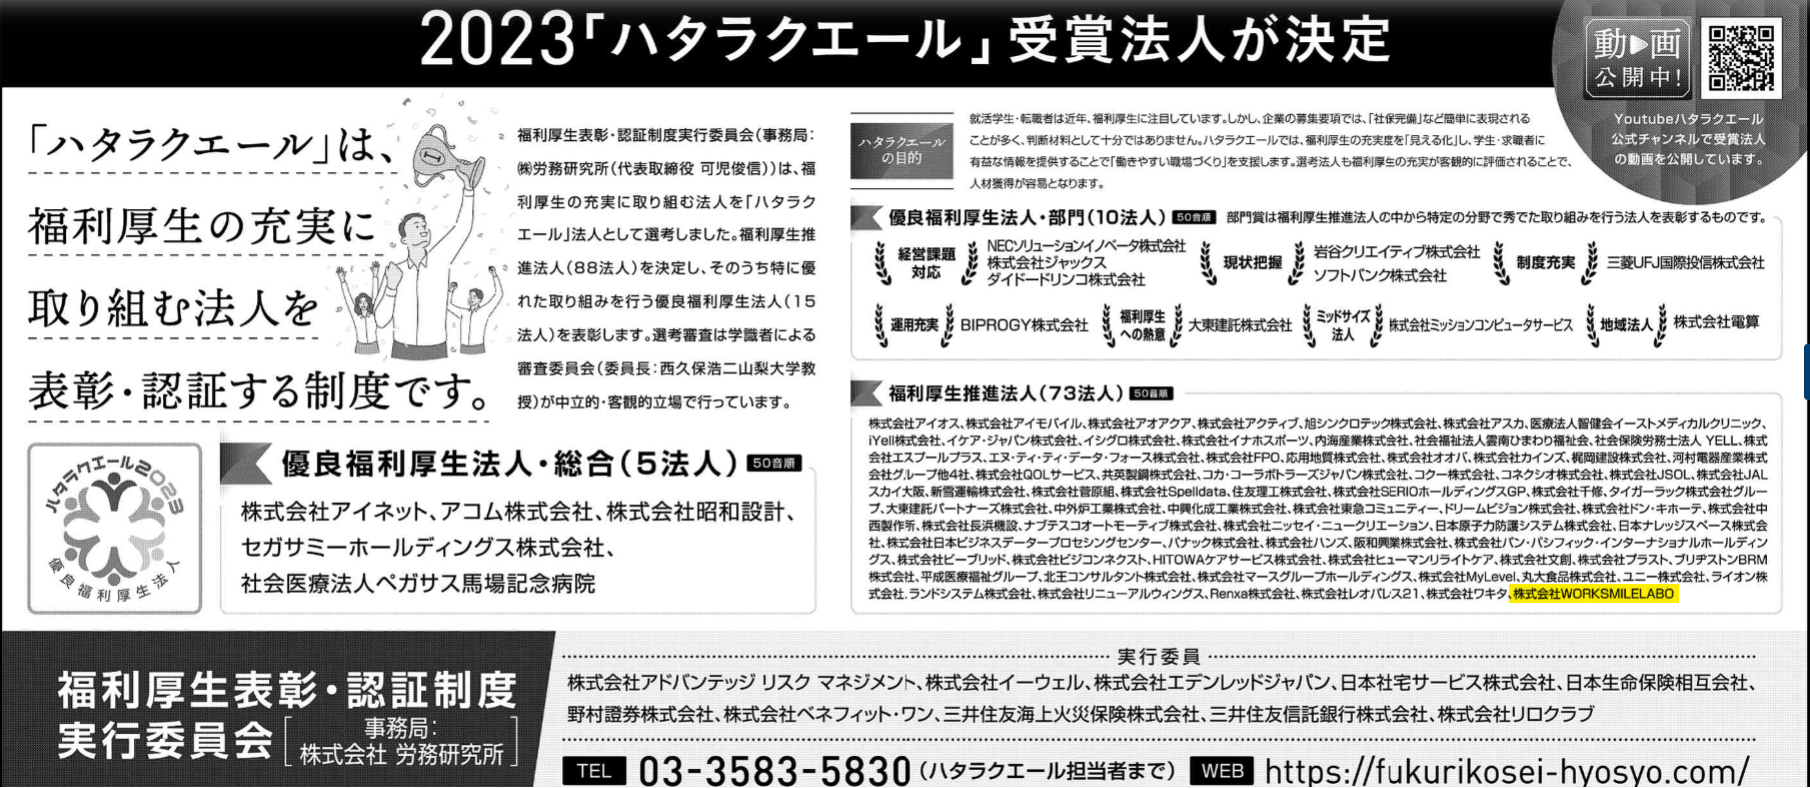 http://www.pegasus.or.jp/images/nikkei.jpg